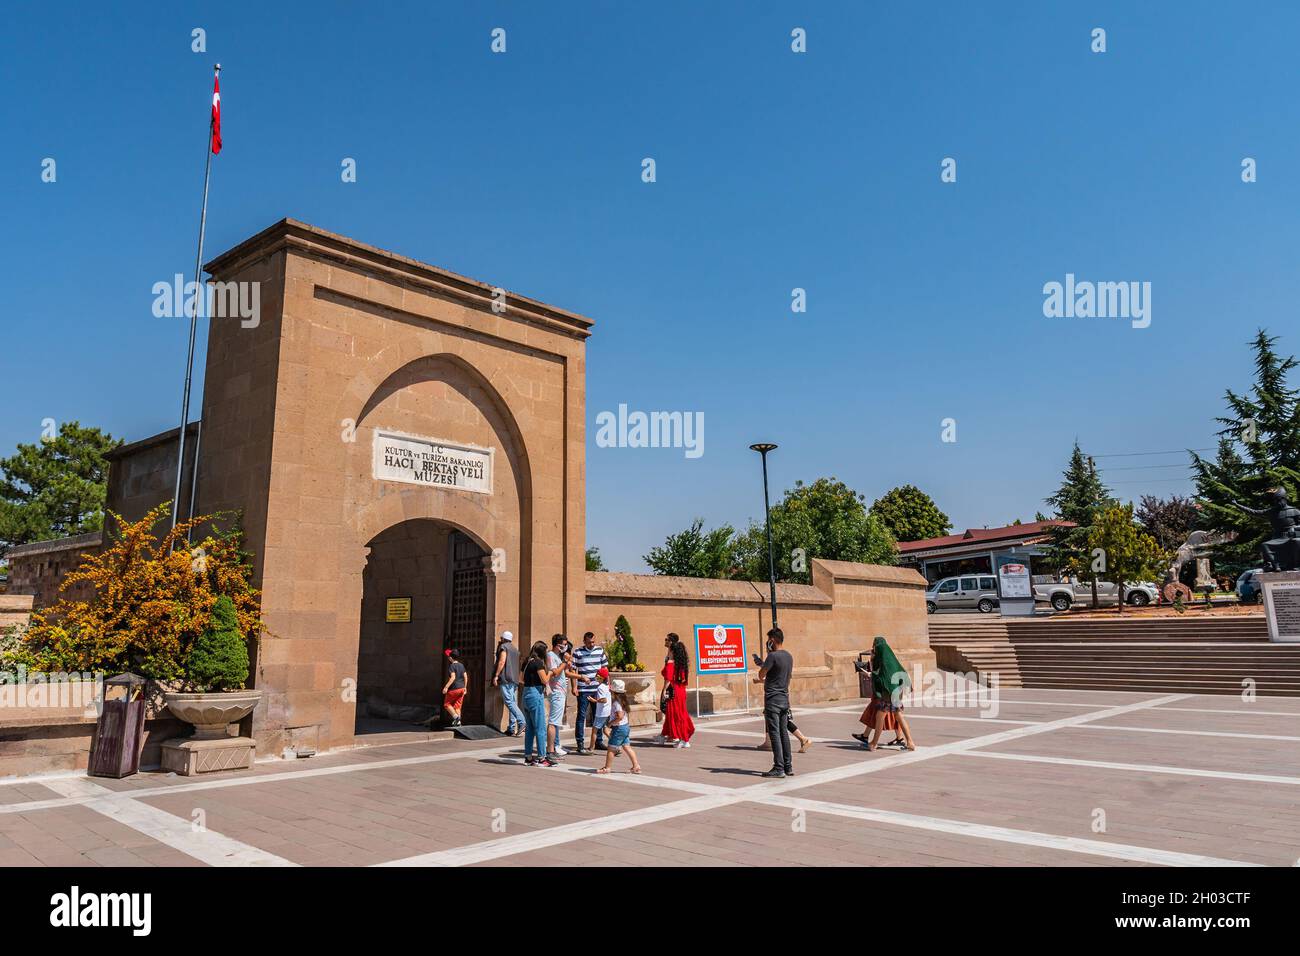 Hacibektas Haji Bektash Veli Complex Breathtaking Picturesque View of Entrance Gate on a Blue Sky Day in Summer Stock Photo